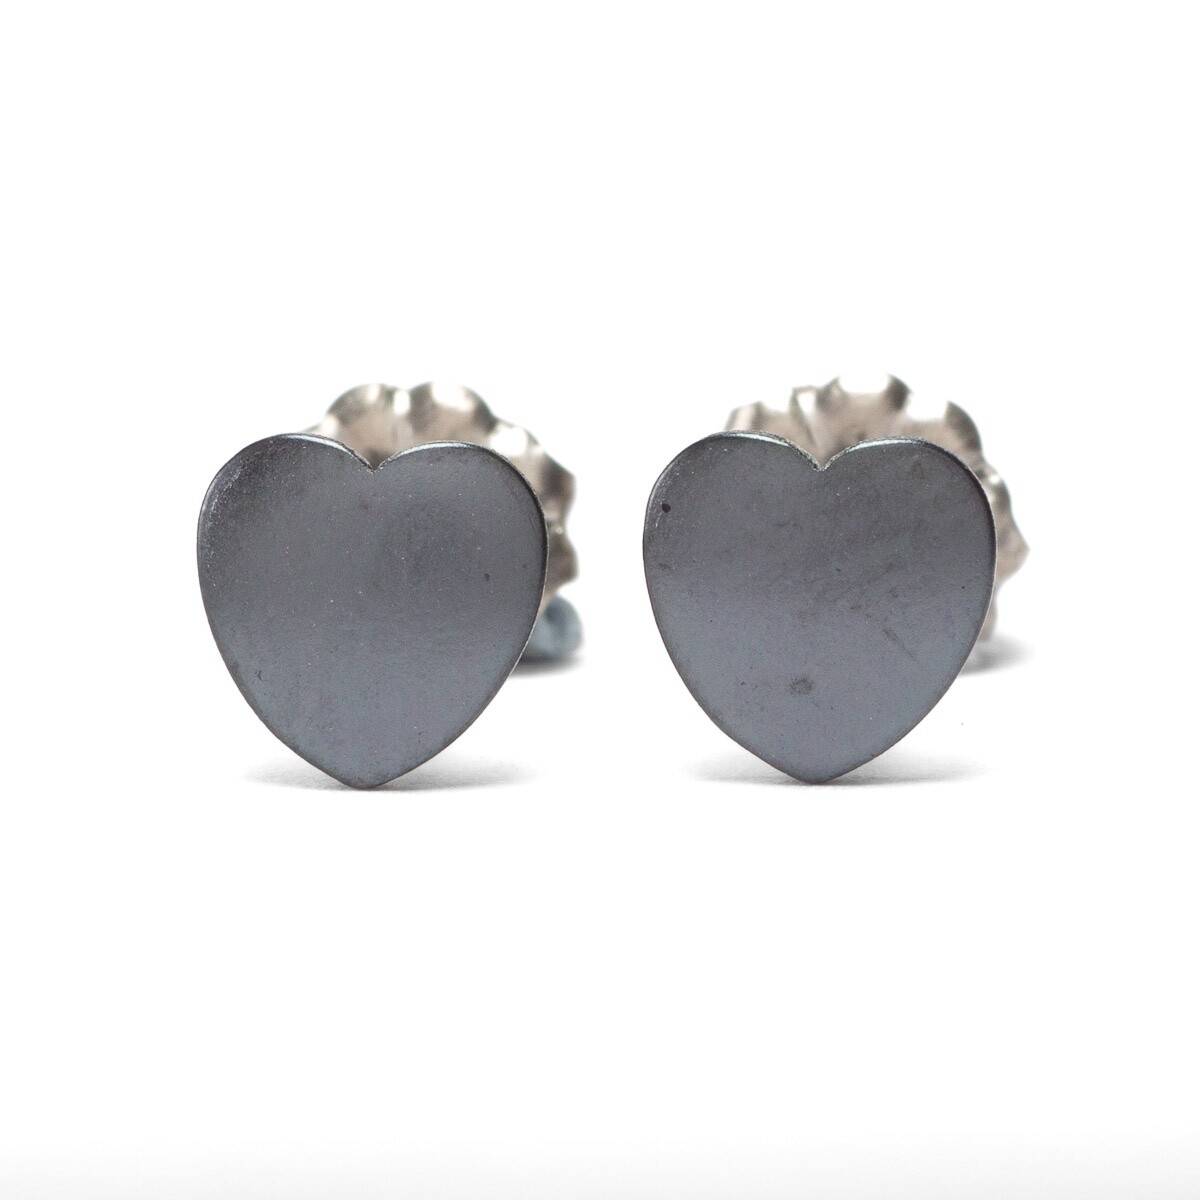 Titanium Heart Studs - Small - Black by Prism Design